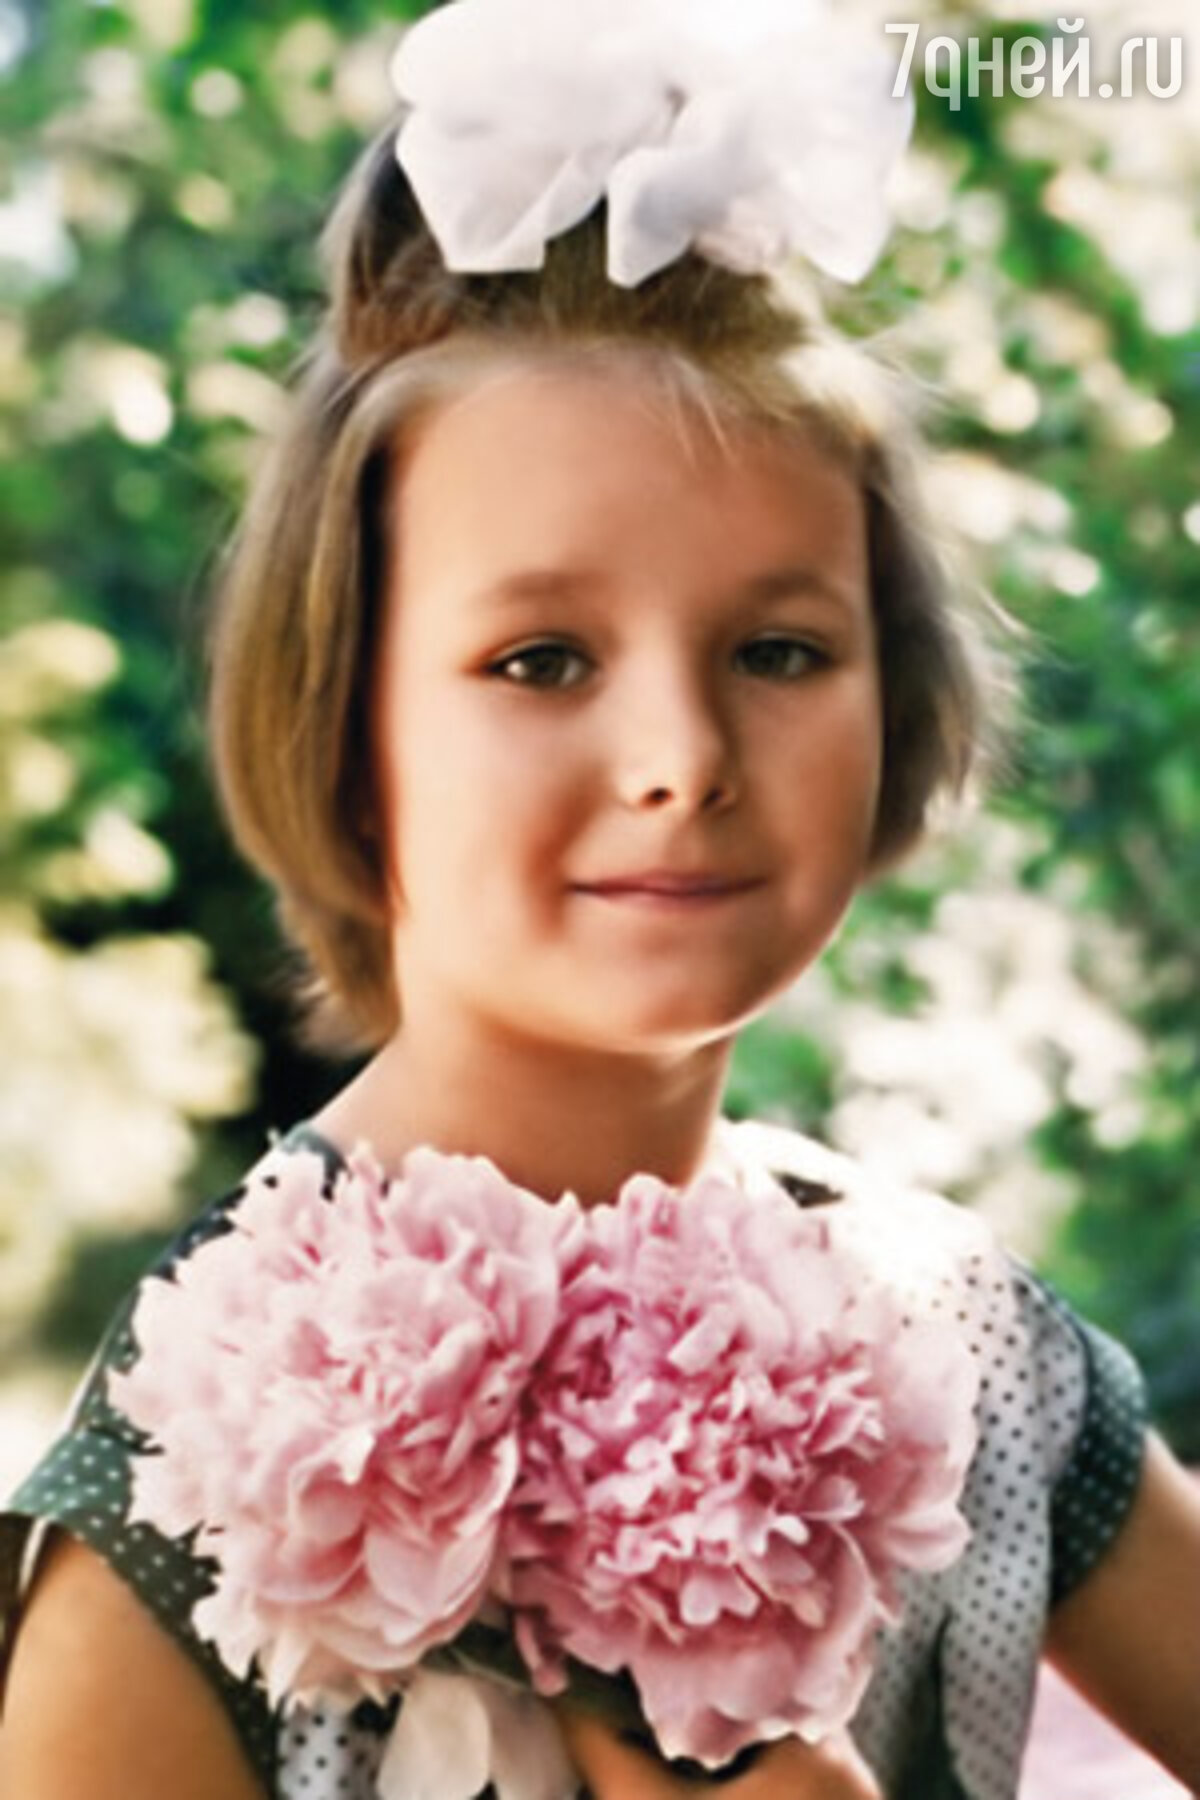 оксана федорова в детстве фото